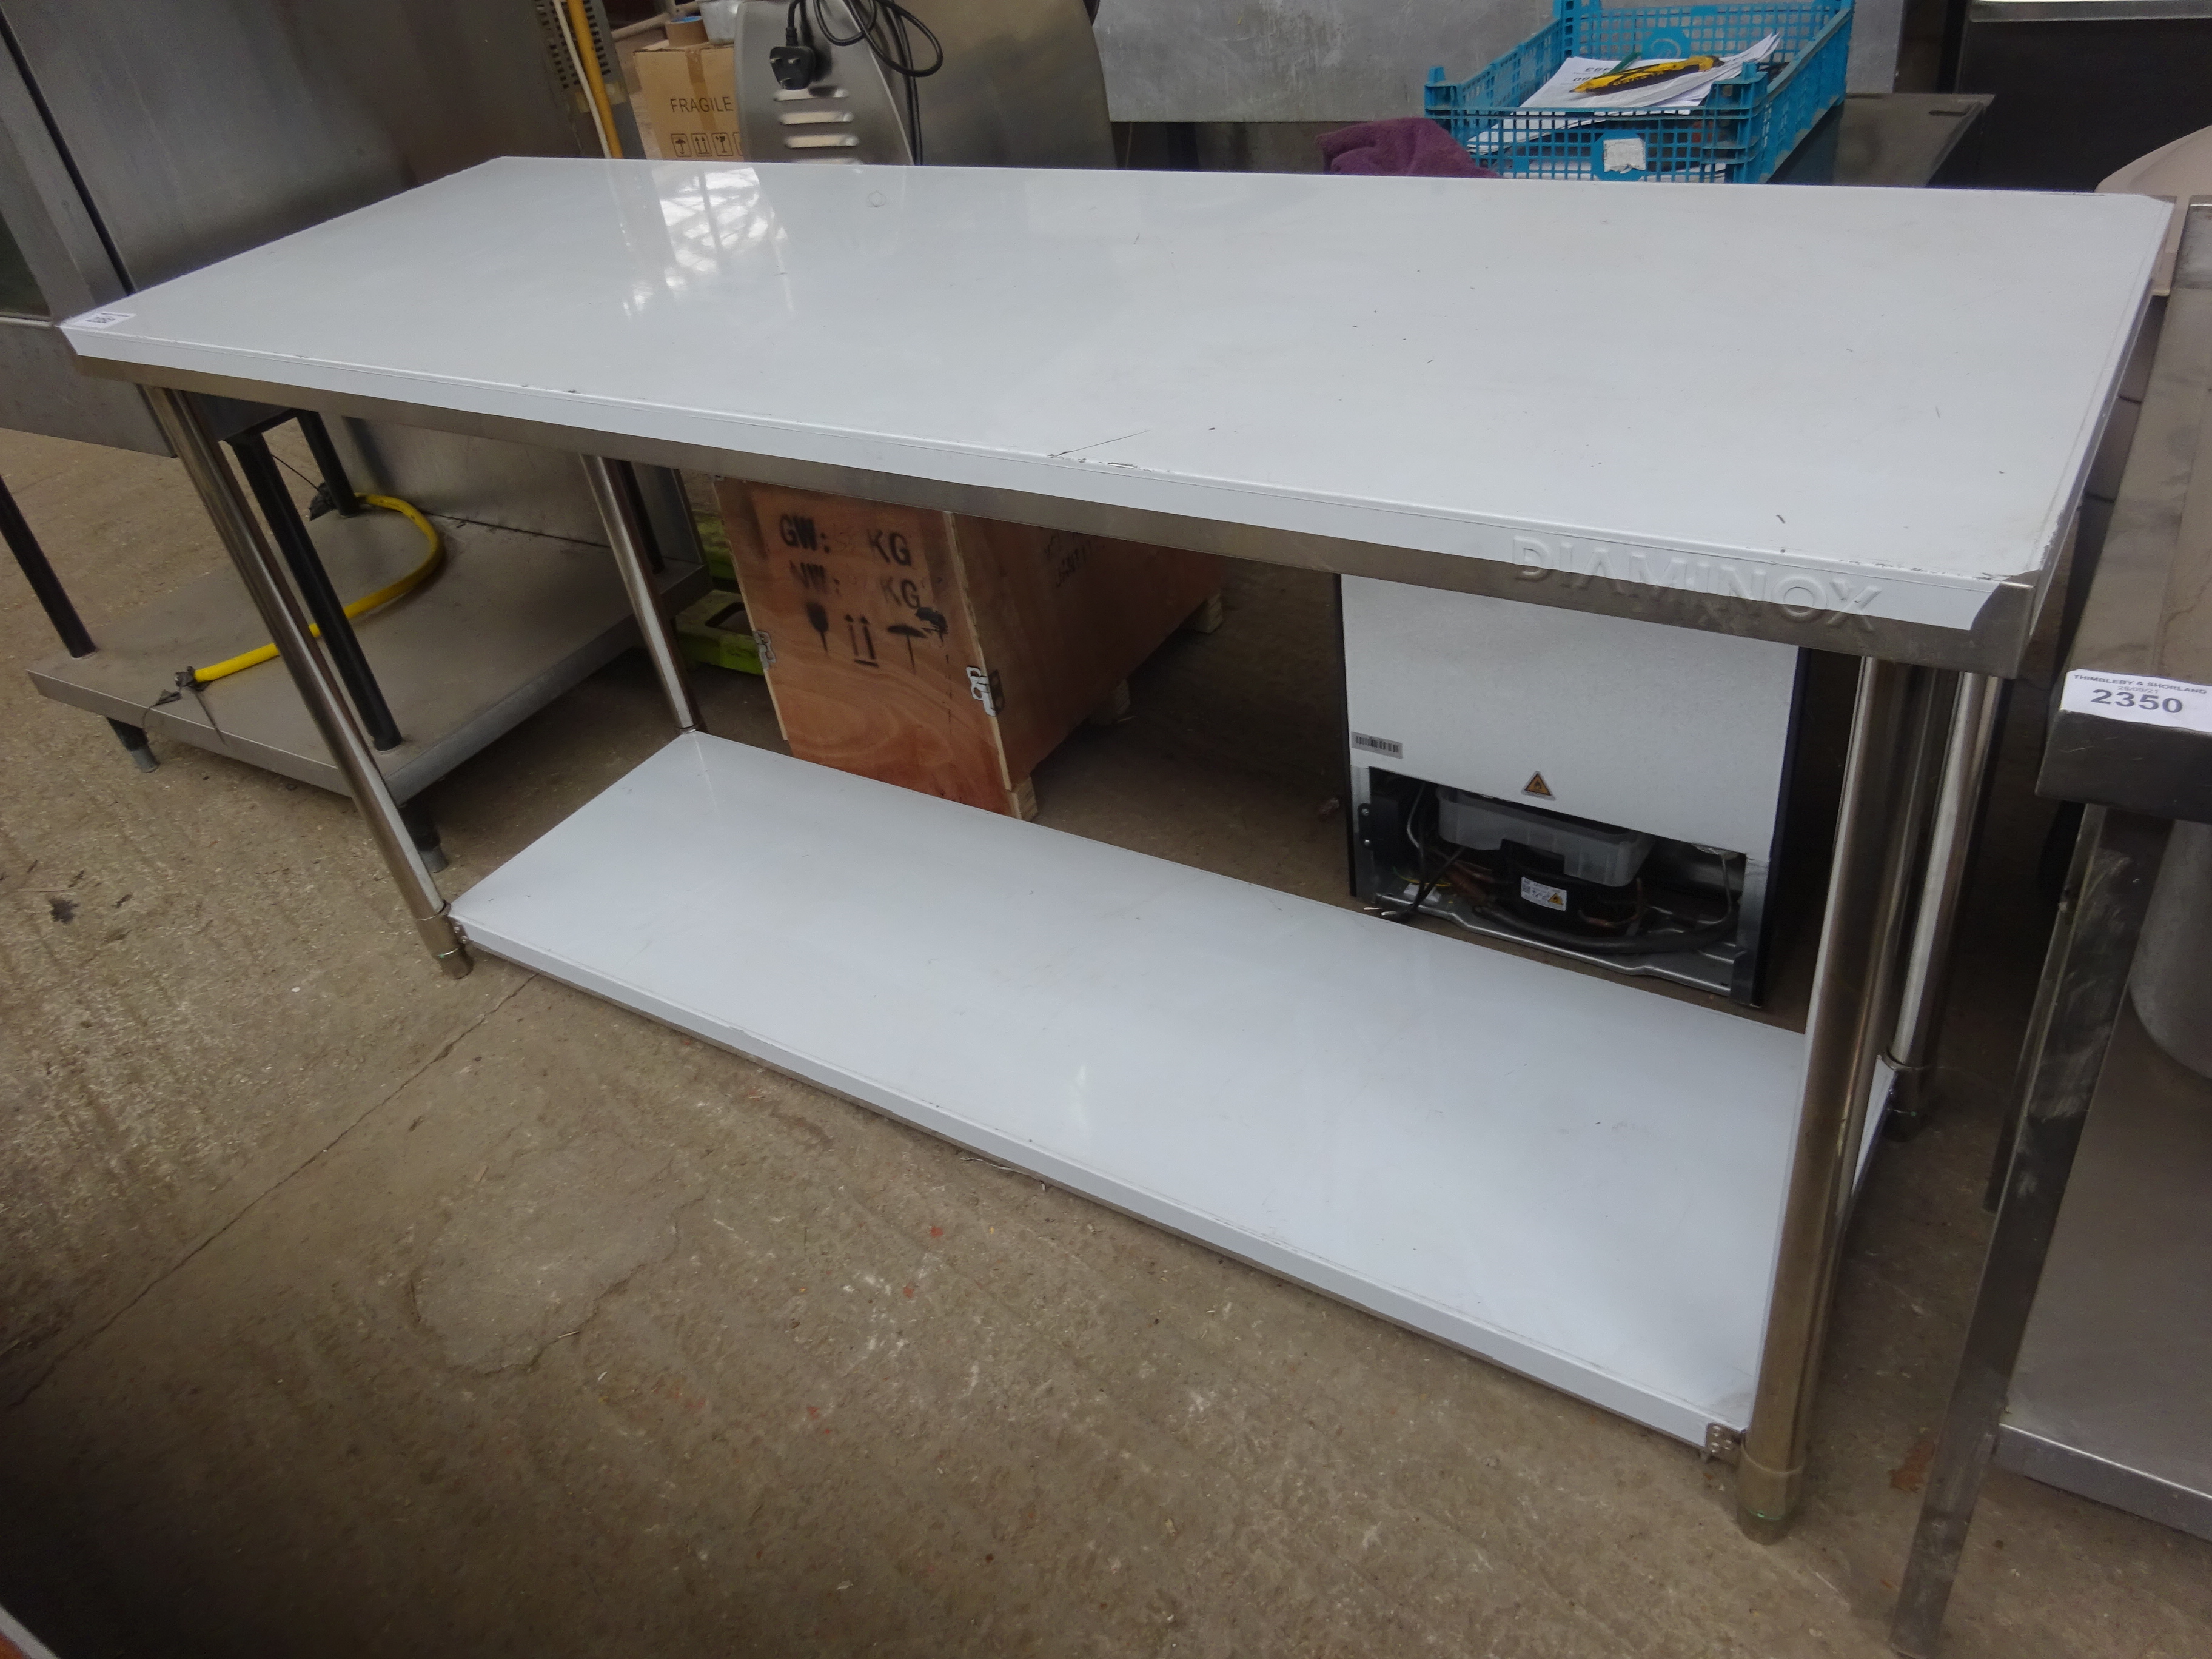 Diaminox prep table with under shelf